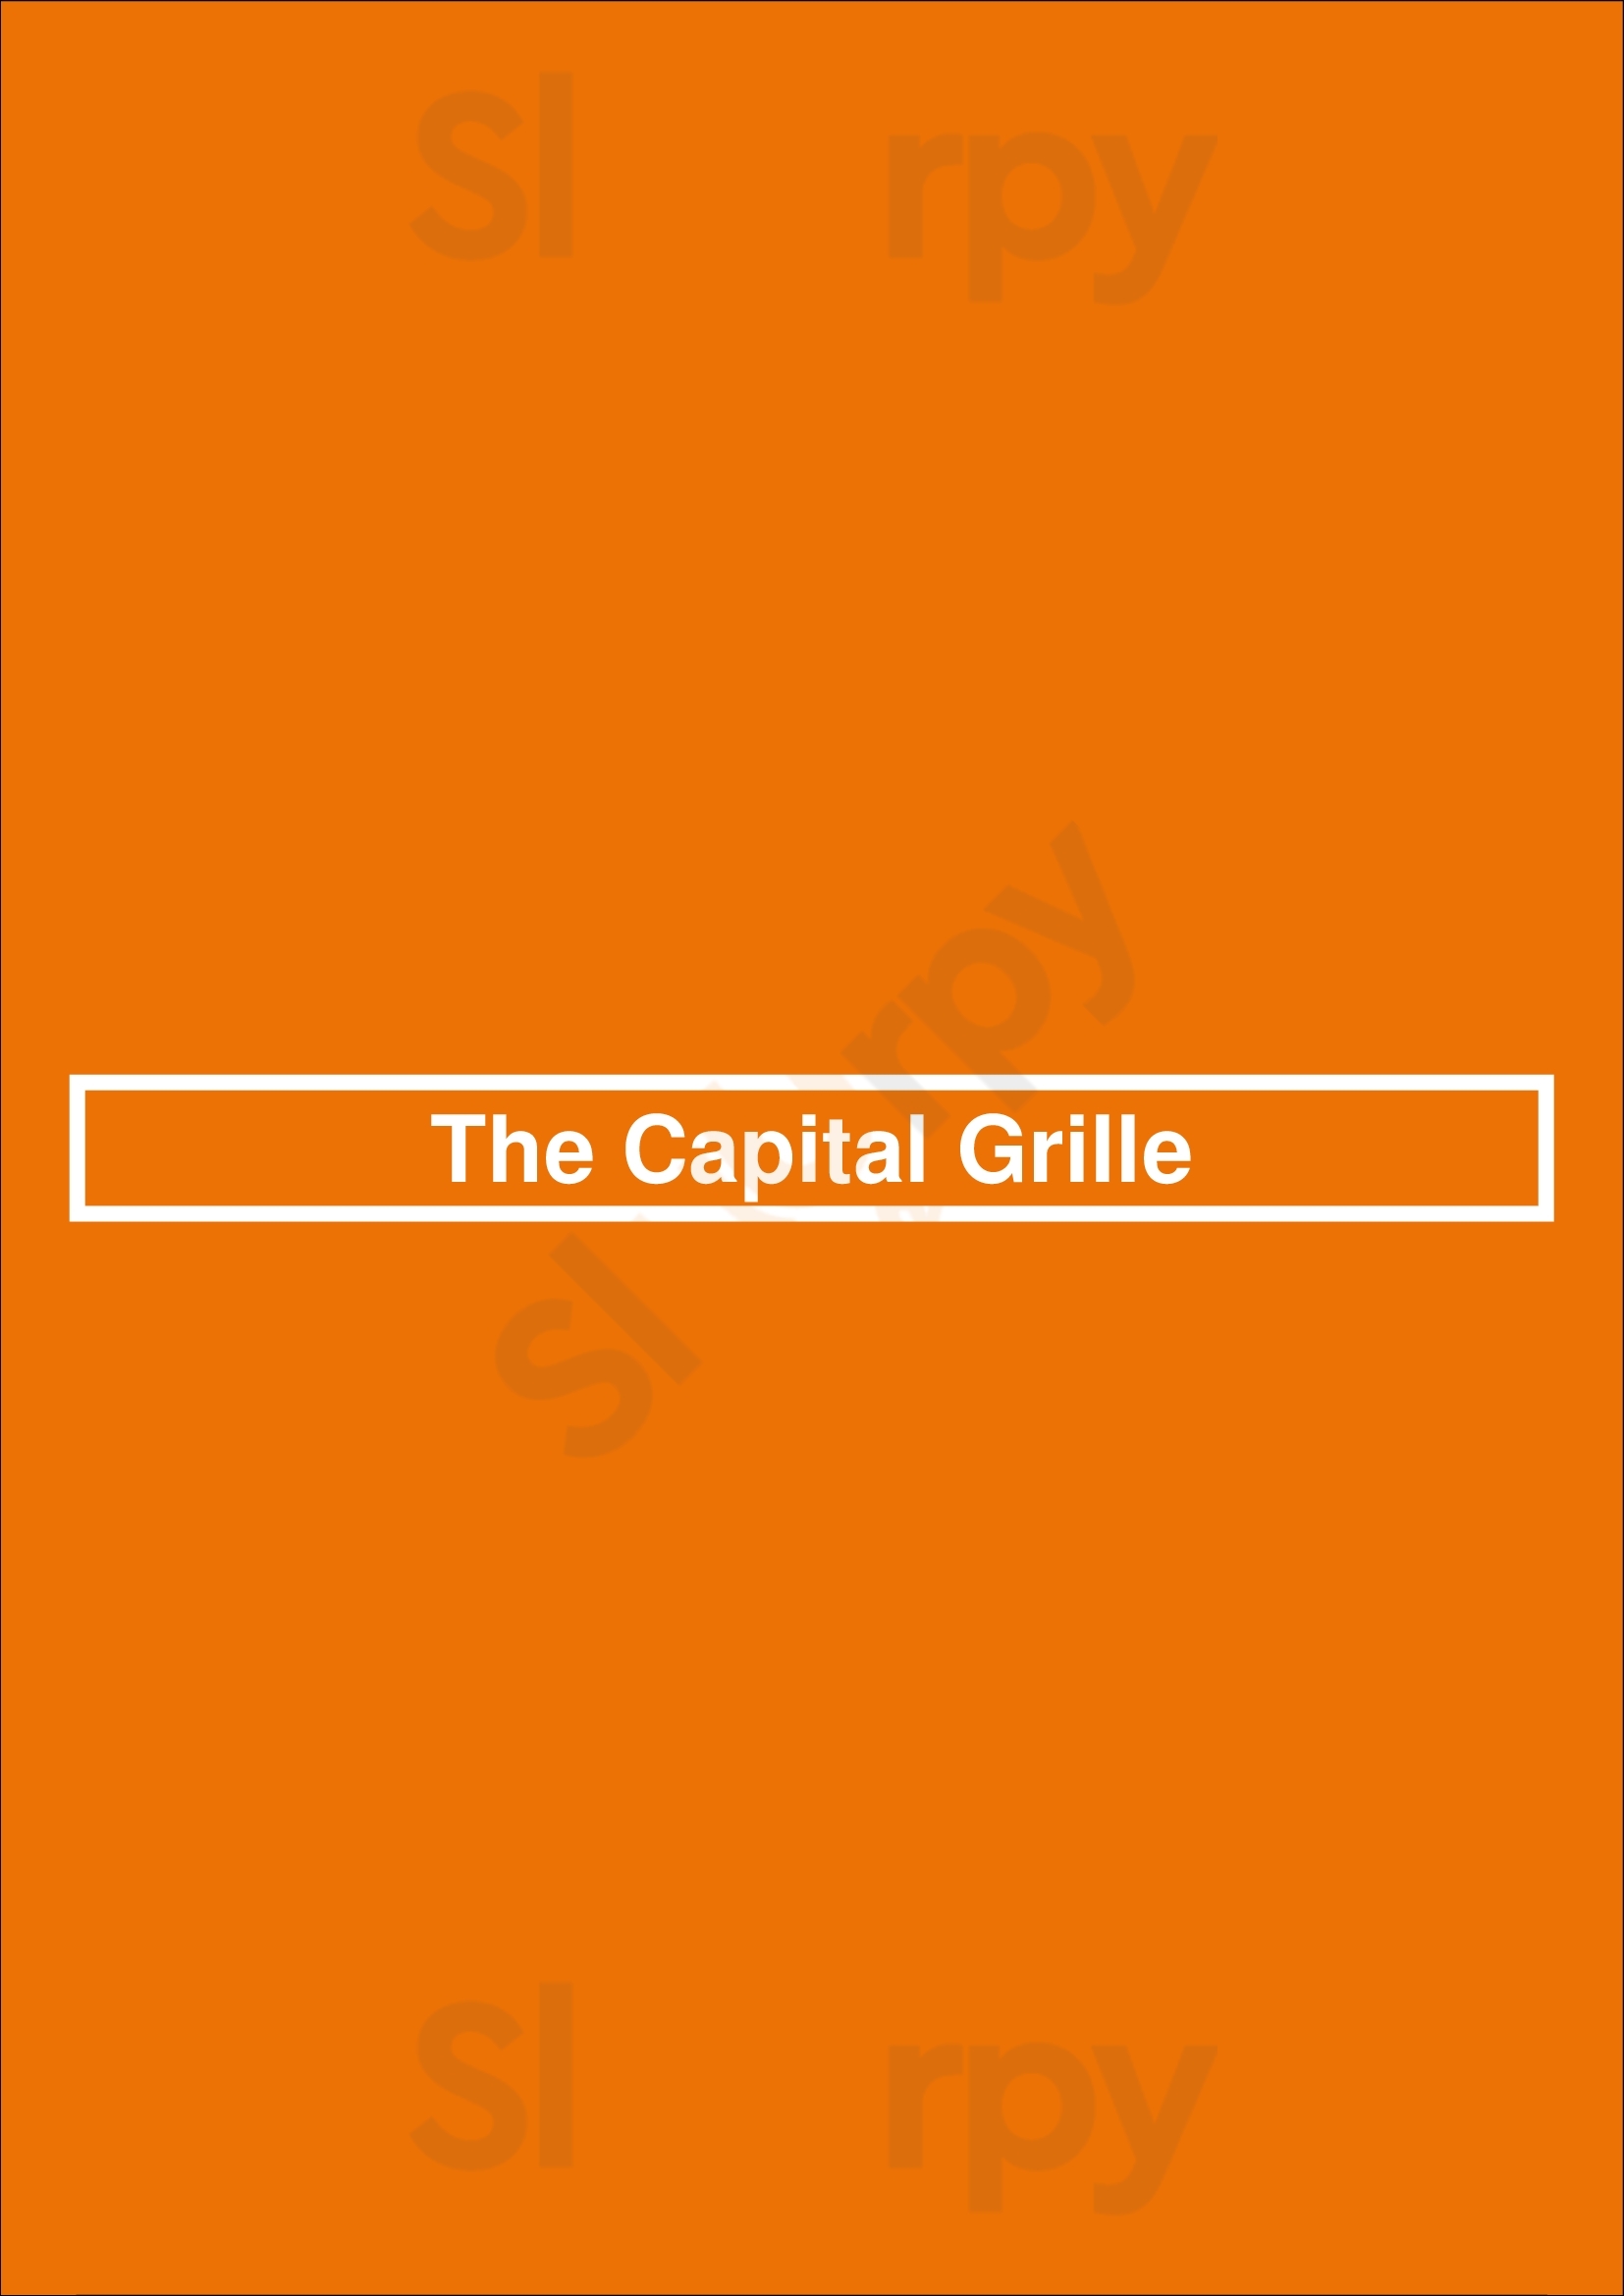 The Capital Grille Denver Menu - 1